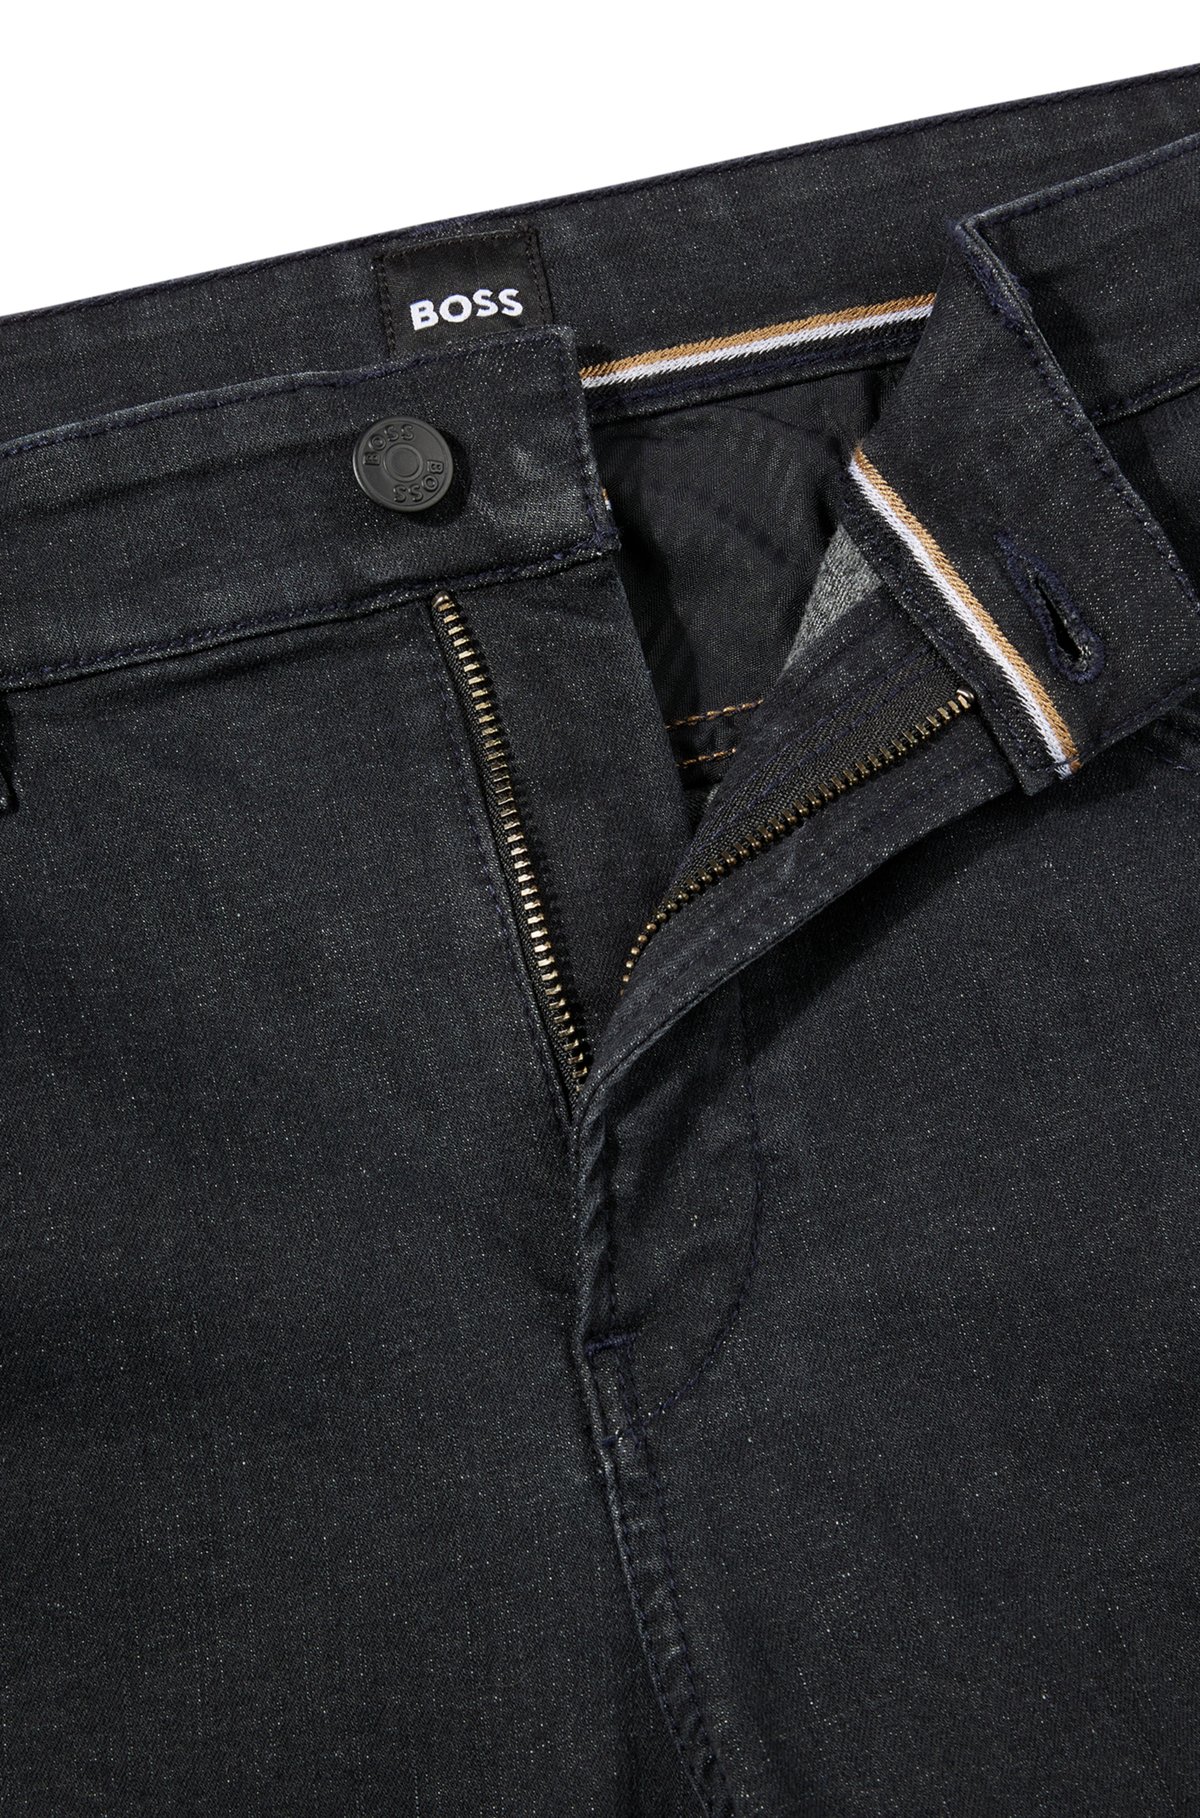 Hugo Boss Delaware 3 Jeans Top Sellers | website.jkuat.ac.ke